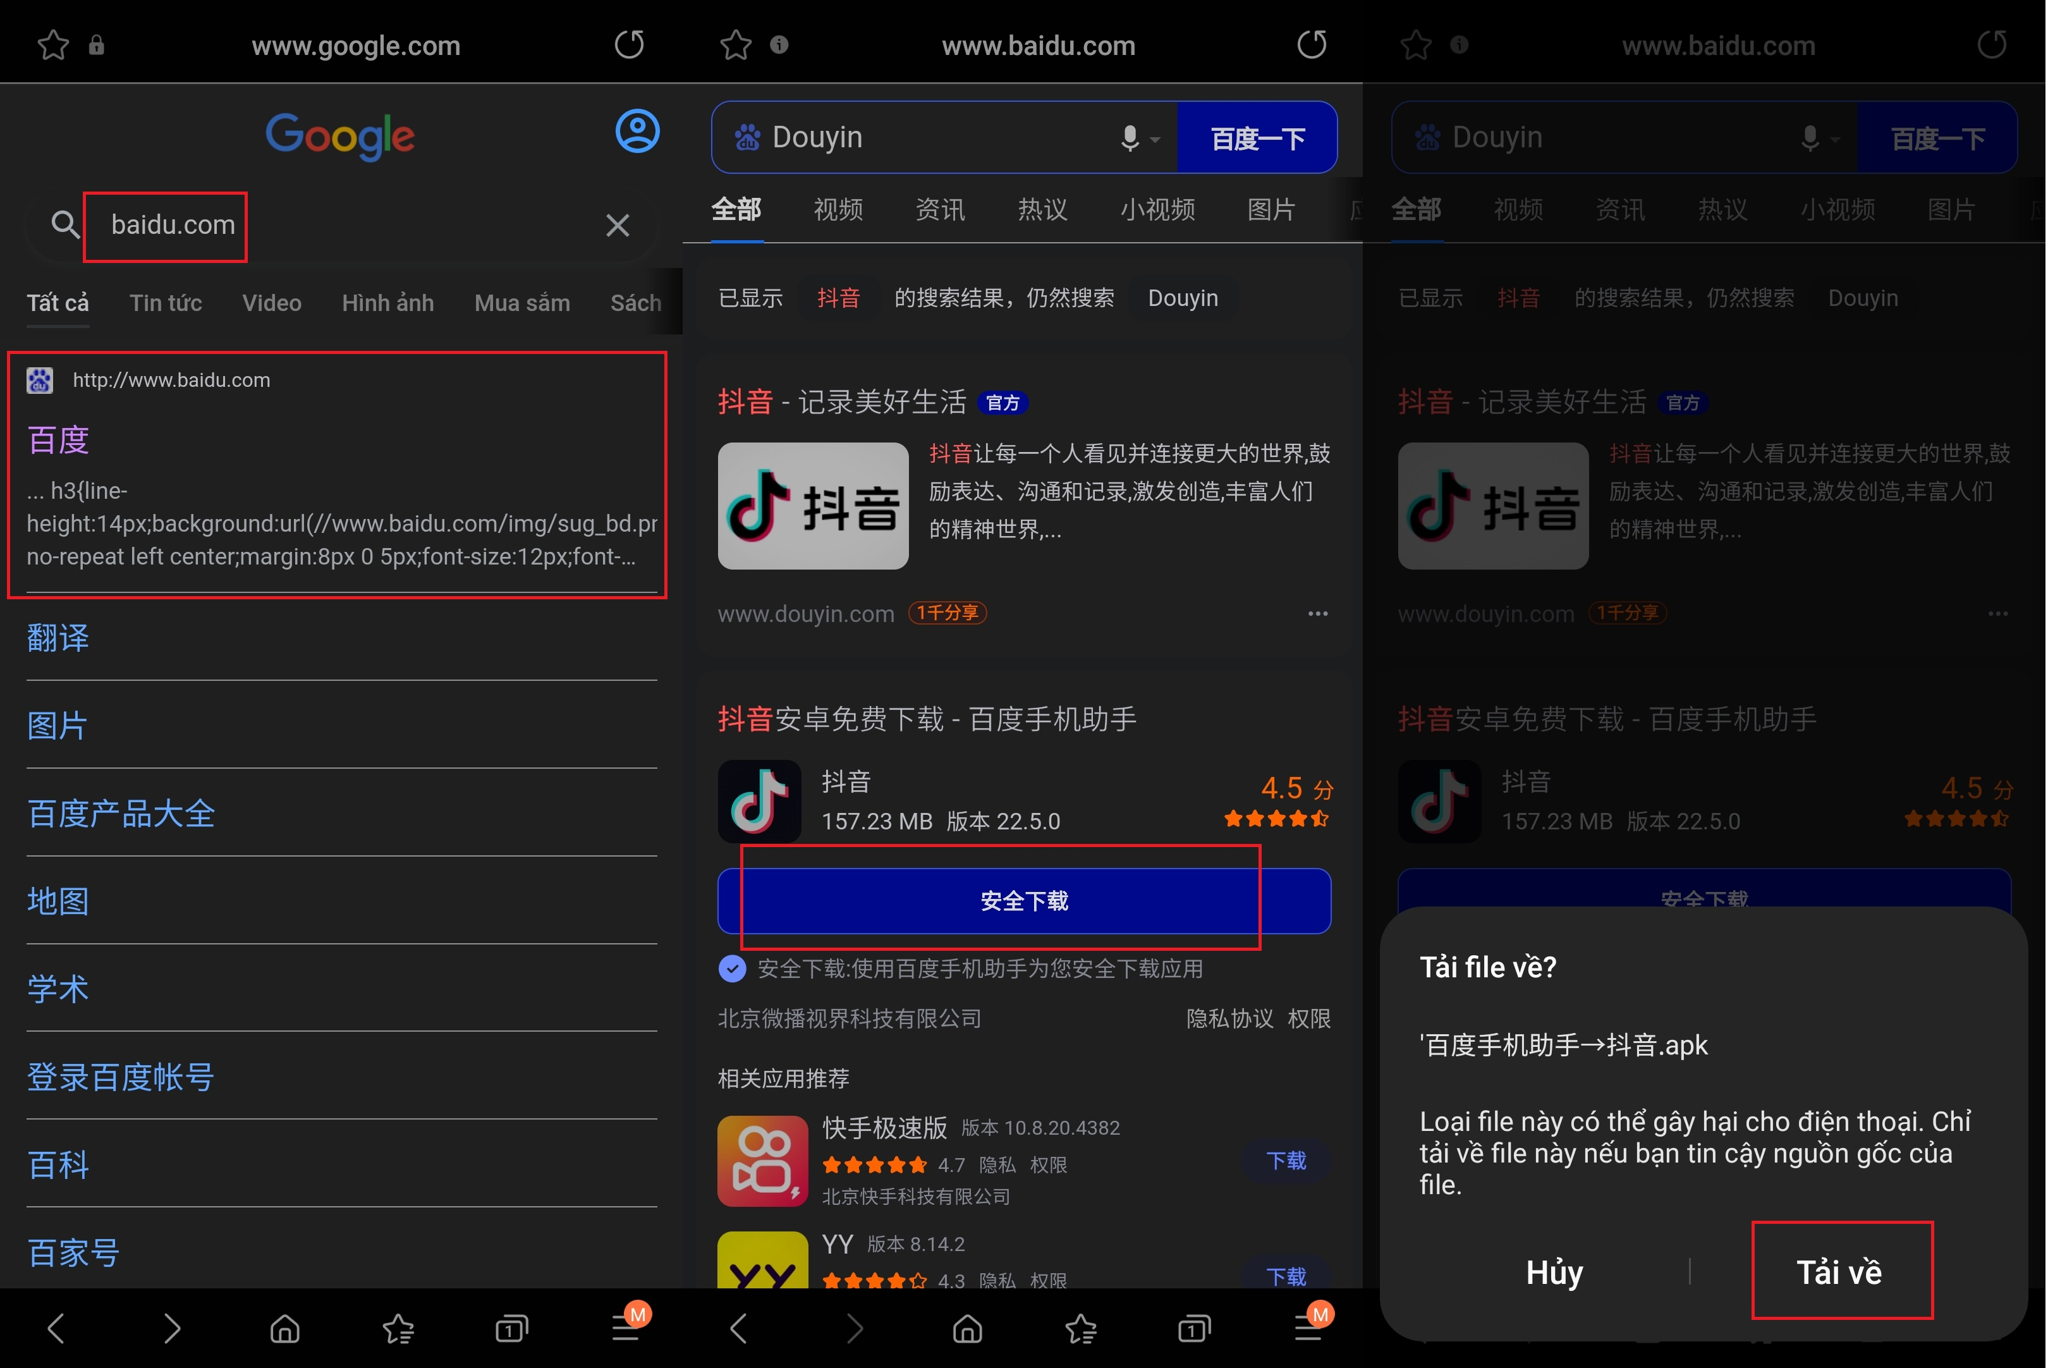 GEARVN - Tải Douyin từ Baidu.com